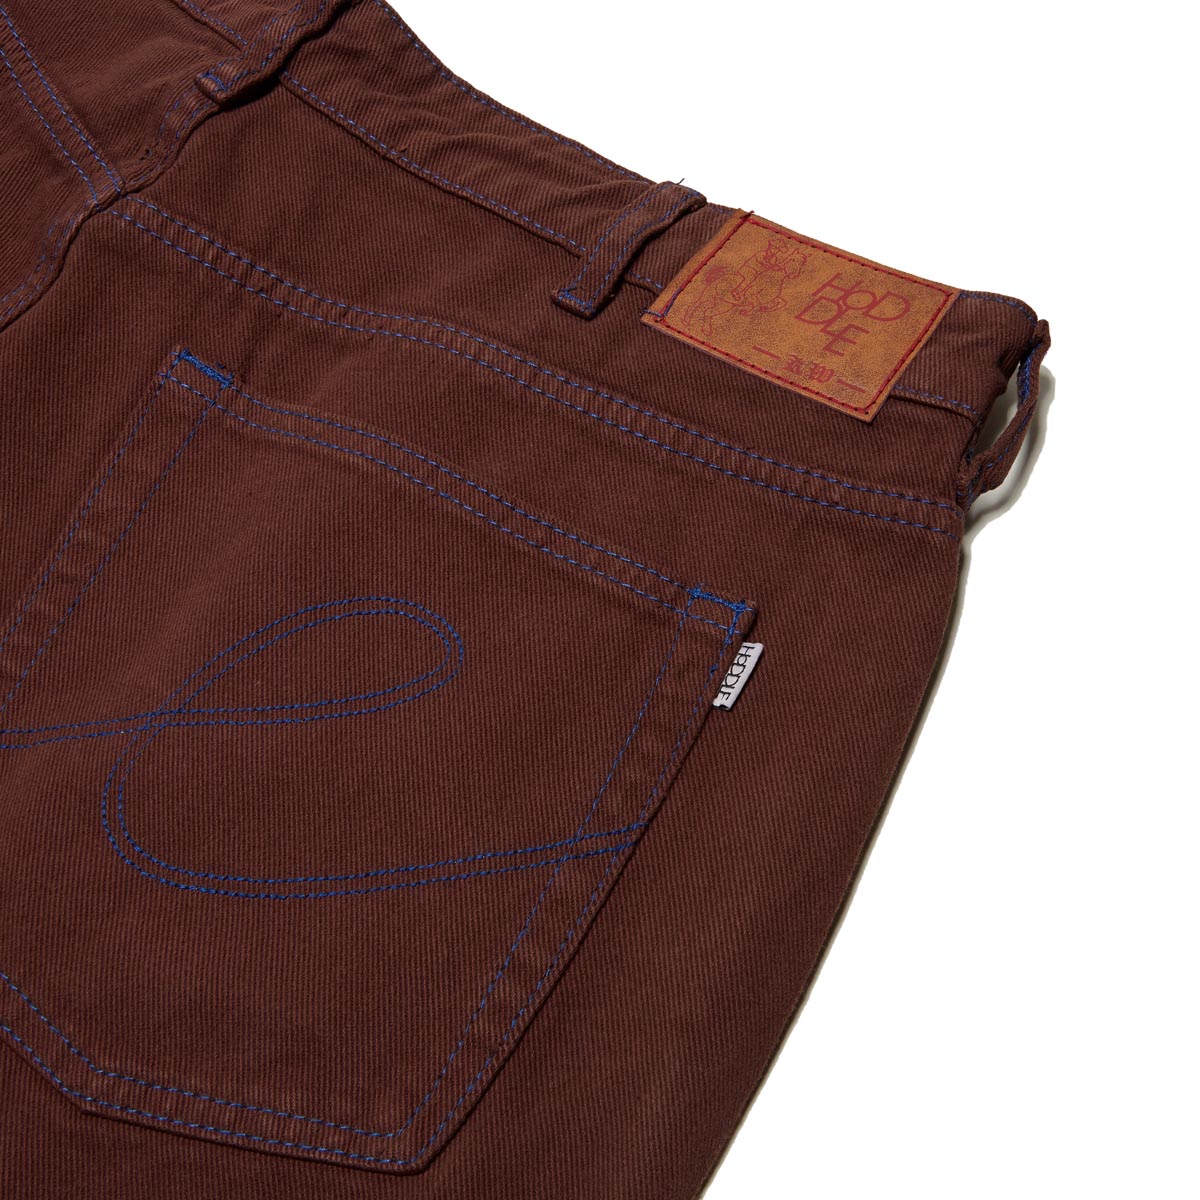 Hoddle 12o Denim Ranger Jeans - Brown/Blue Stitch image 4